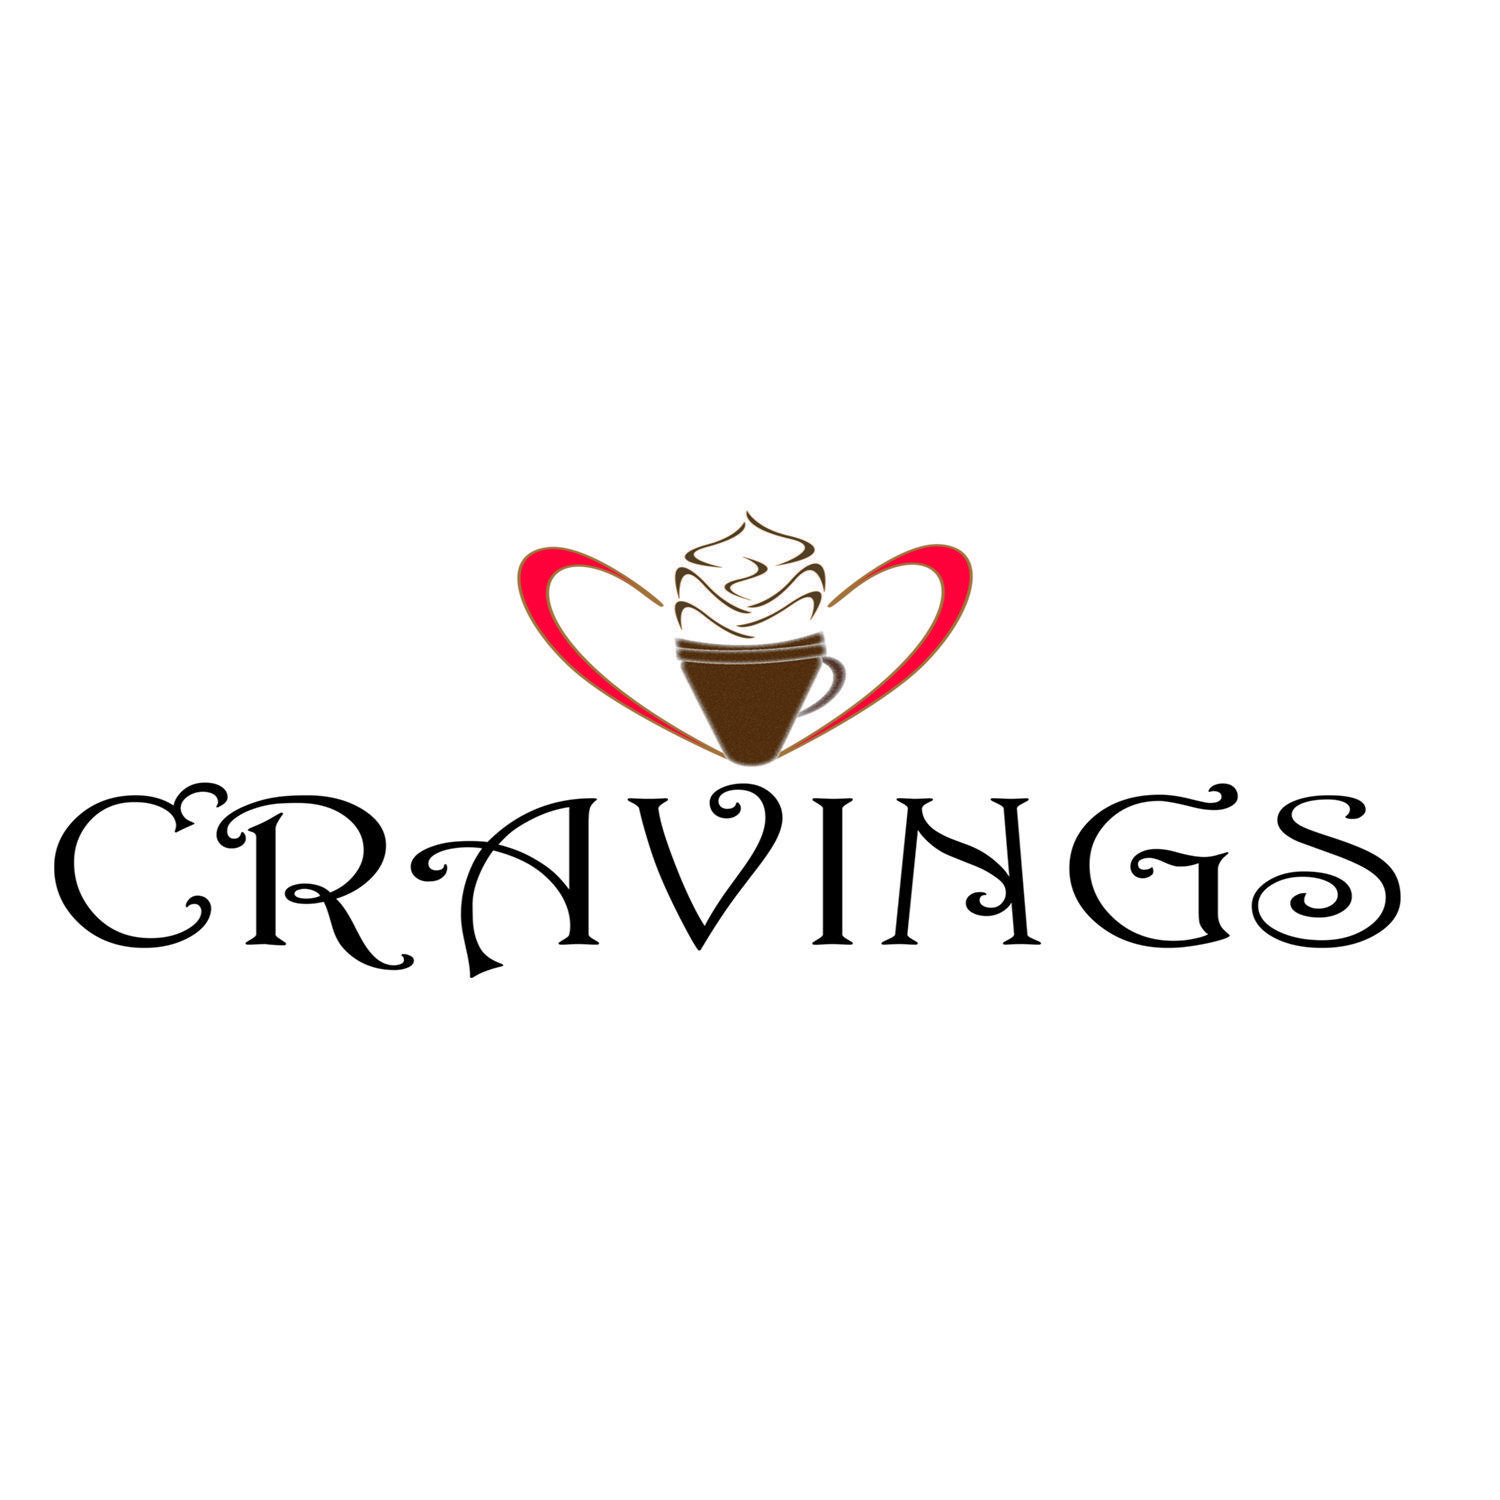 Ice Cream Business Logo - Elegant, Upmarket, Business Logo Design for Cravings Coffee & Ice